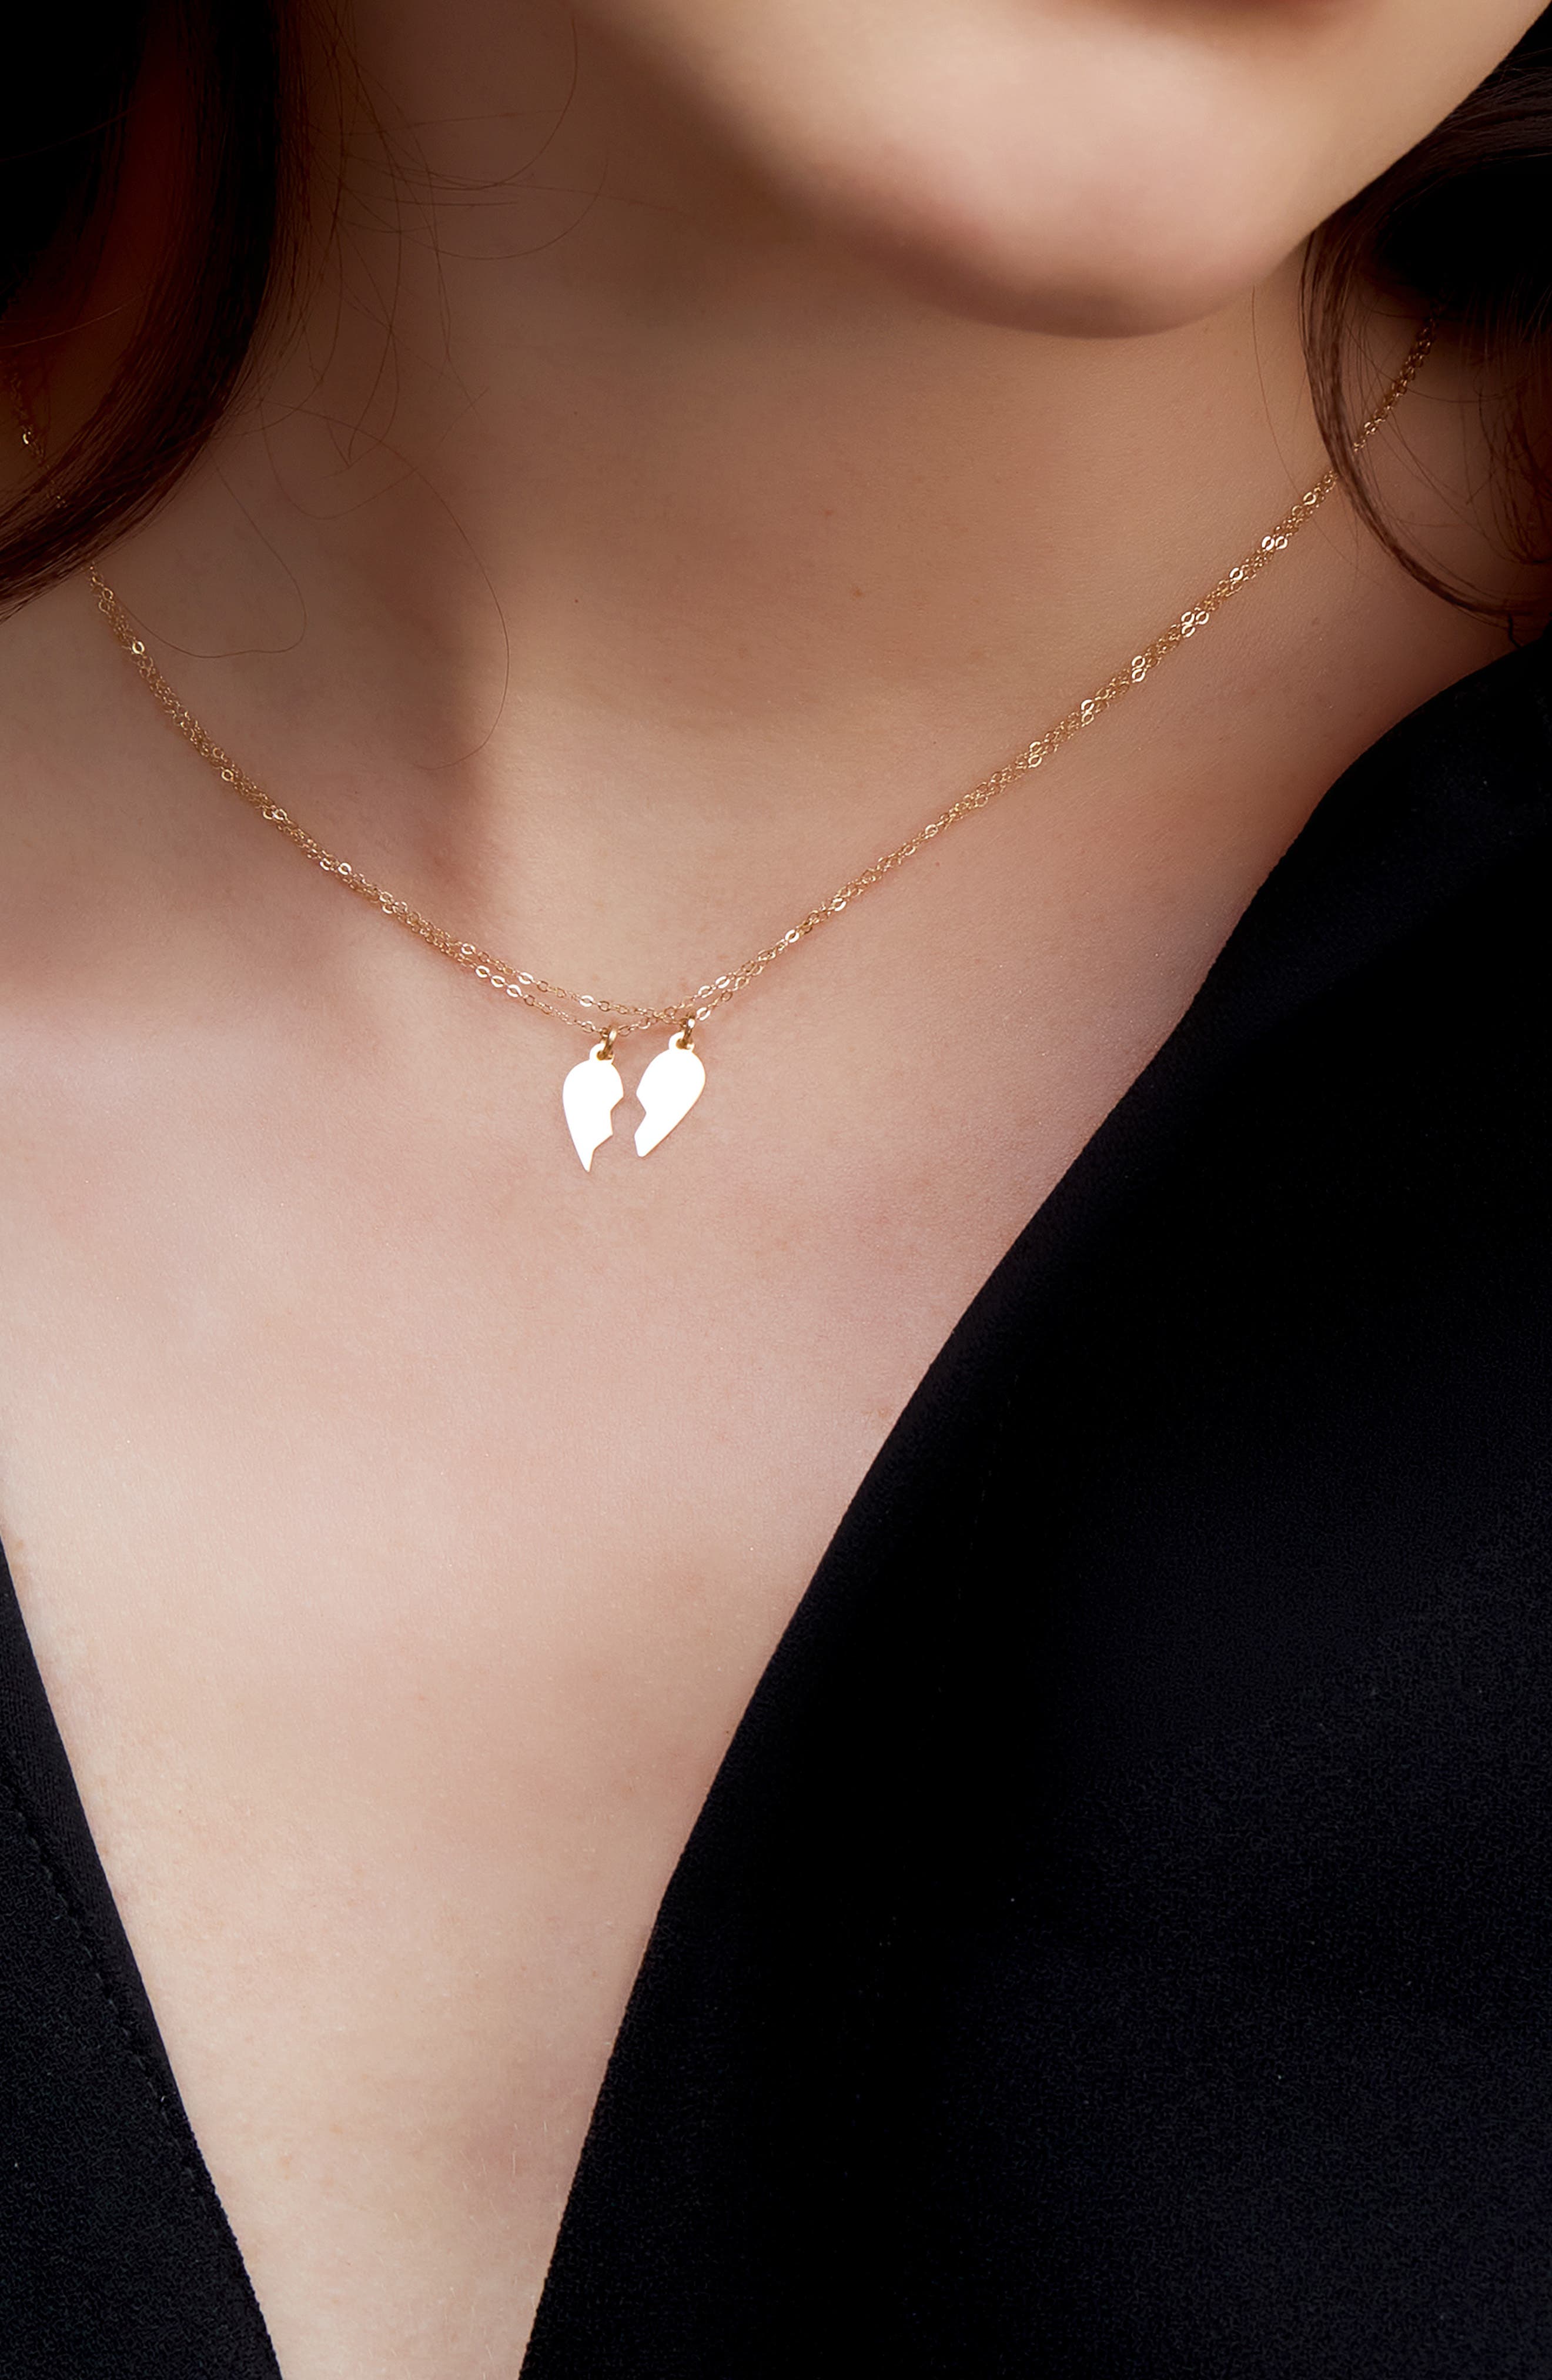 Romantic Classic Fashion Personalized Gifts Women Necklace TROSJ Women Heart Necklace 